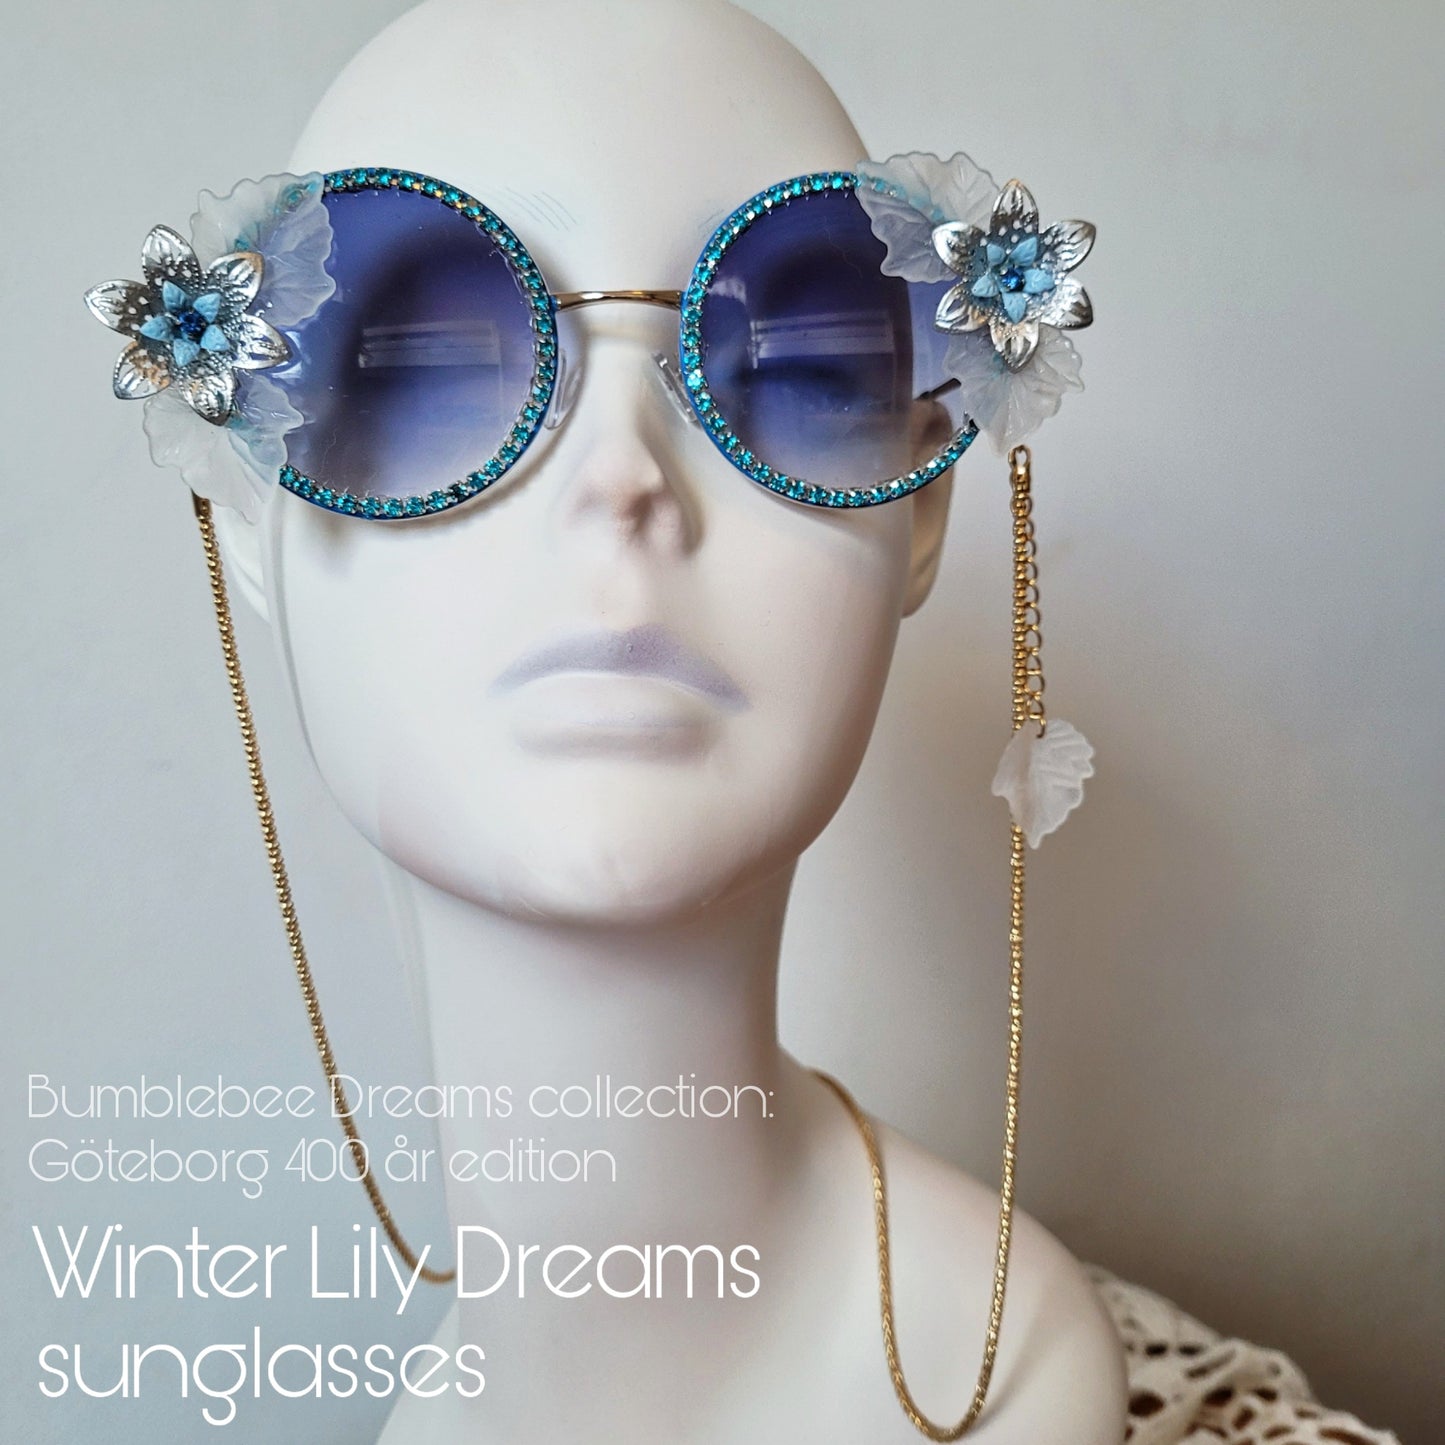 Bumblebee Dreams collection: the Winter Lily Dreams Sunglasses (Göteborg 400 år edition)